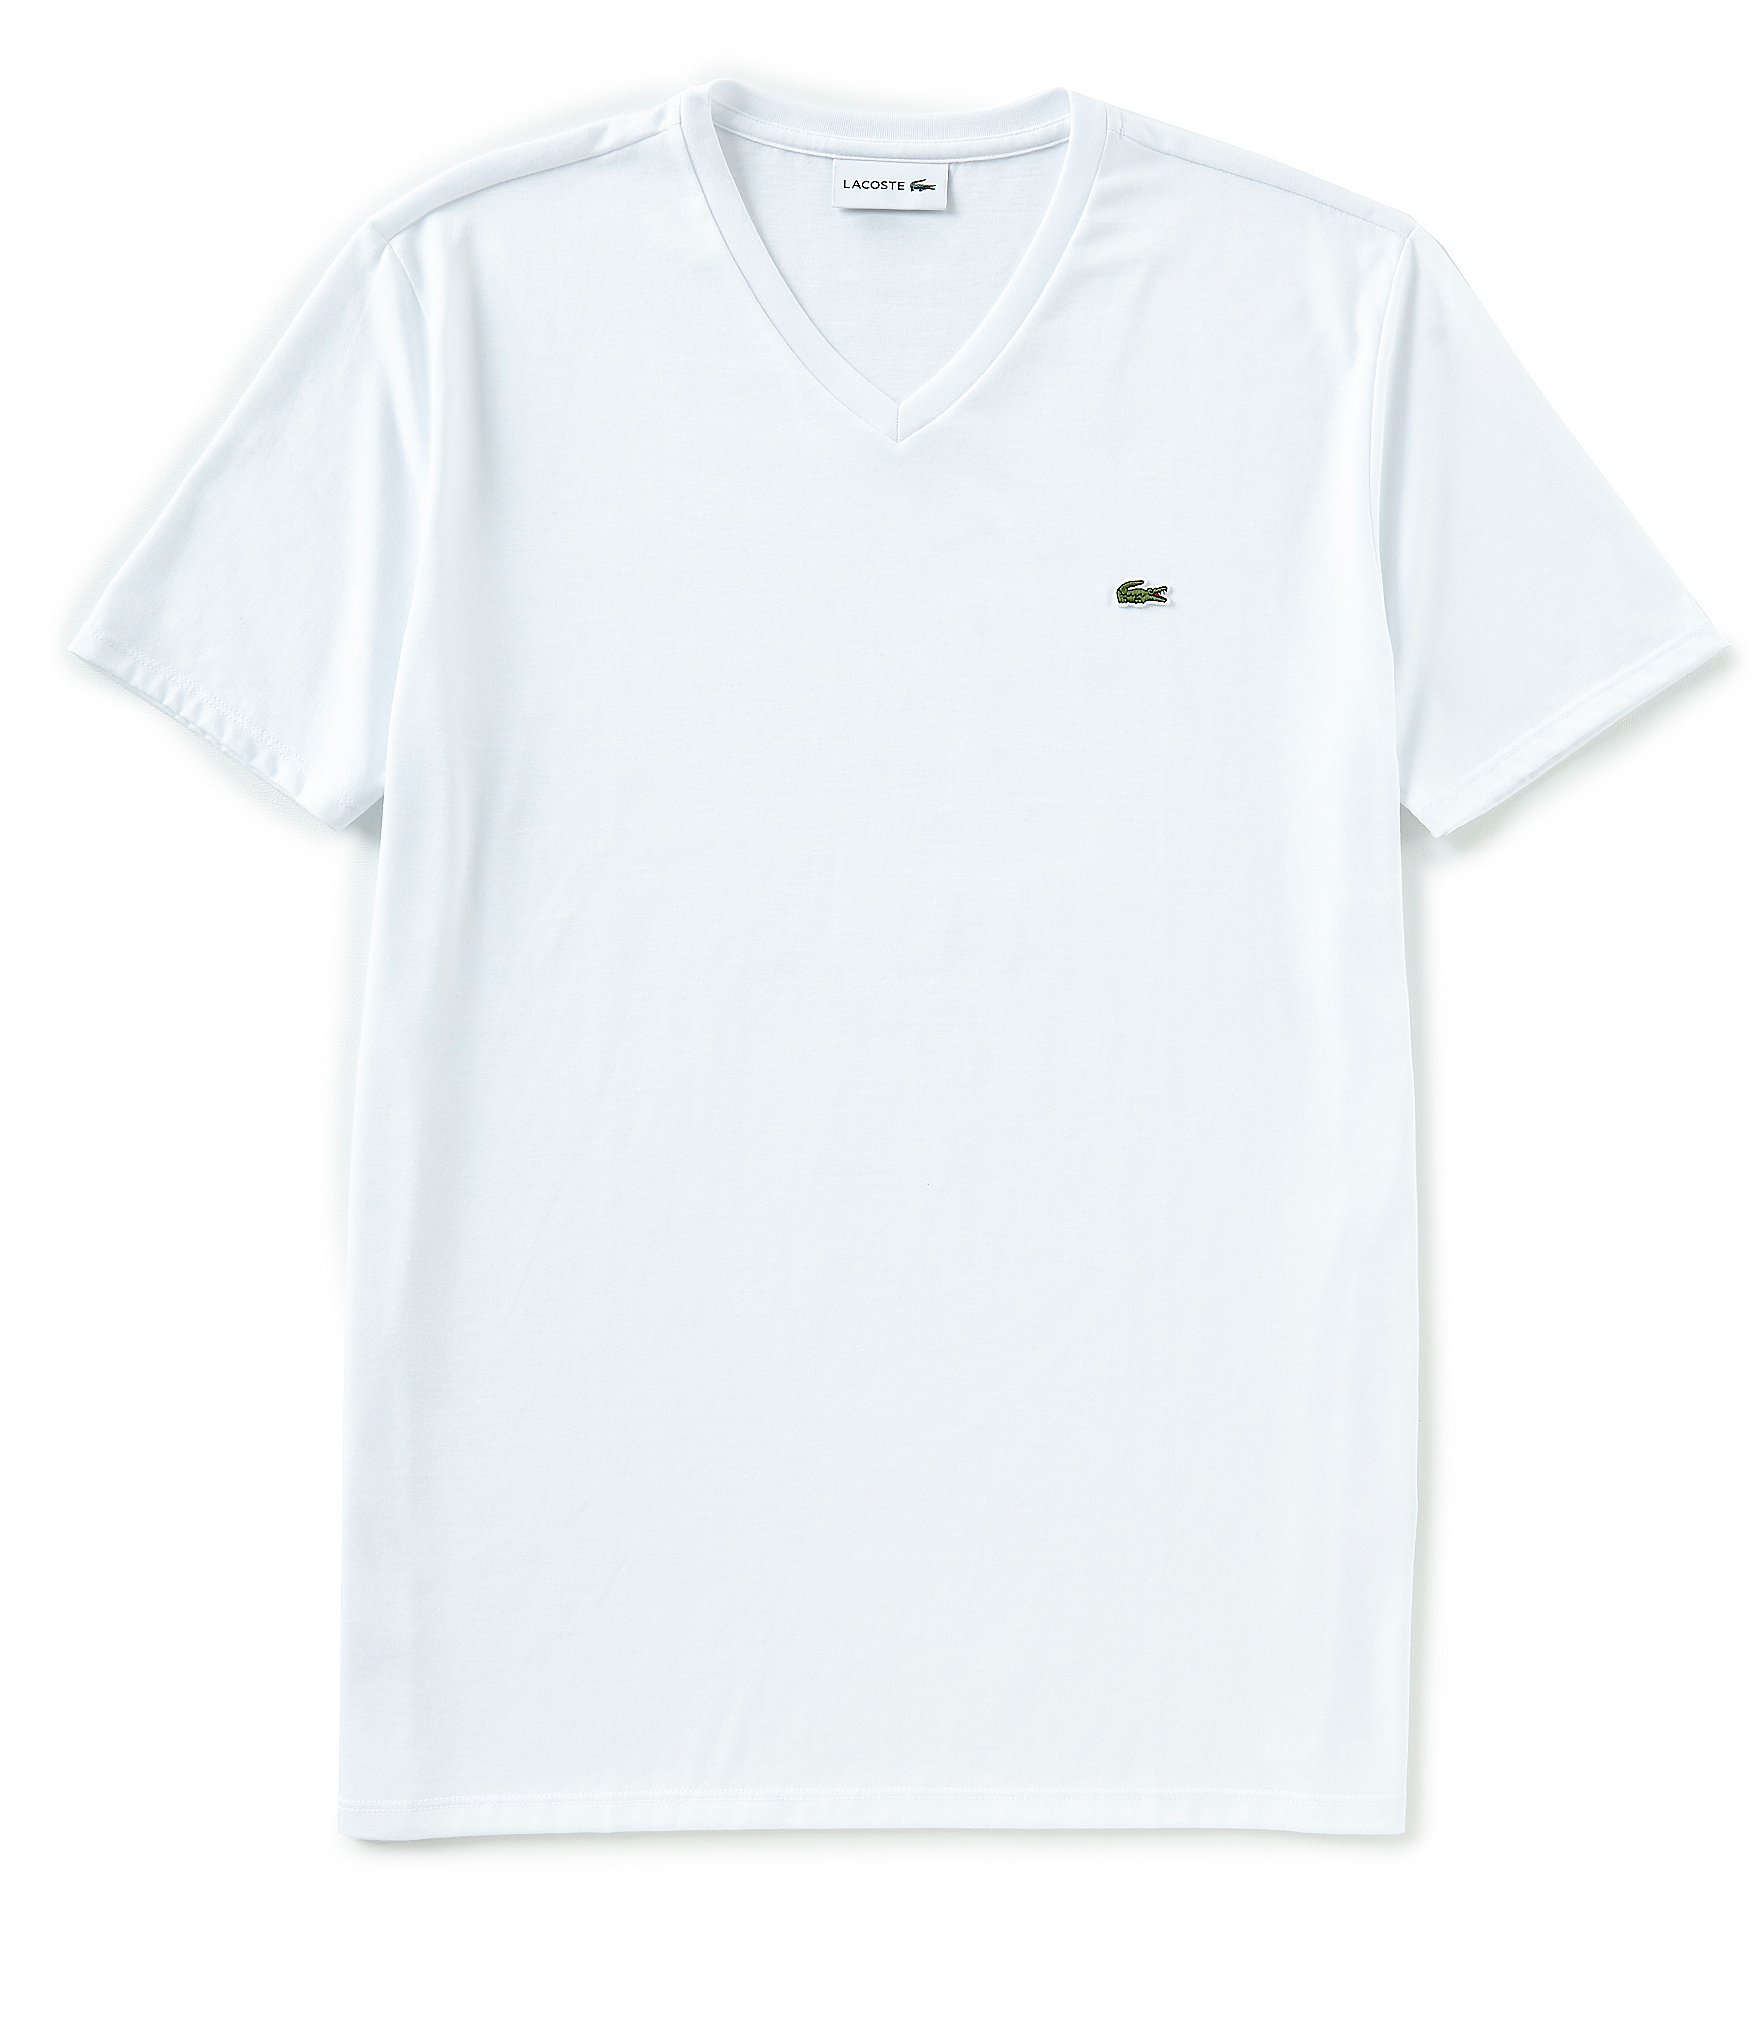 white lacoste polo shirt